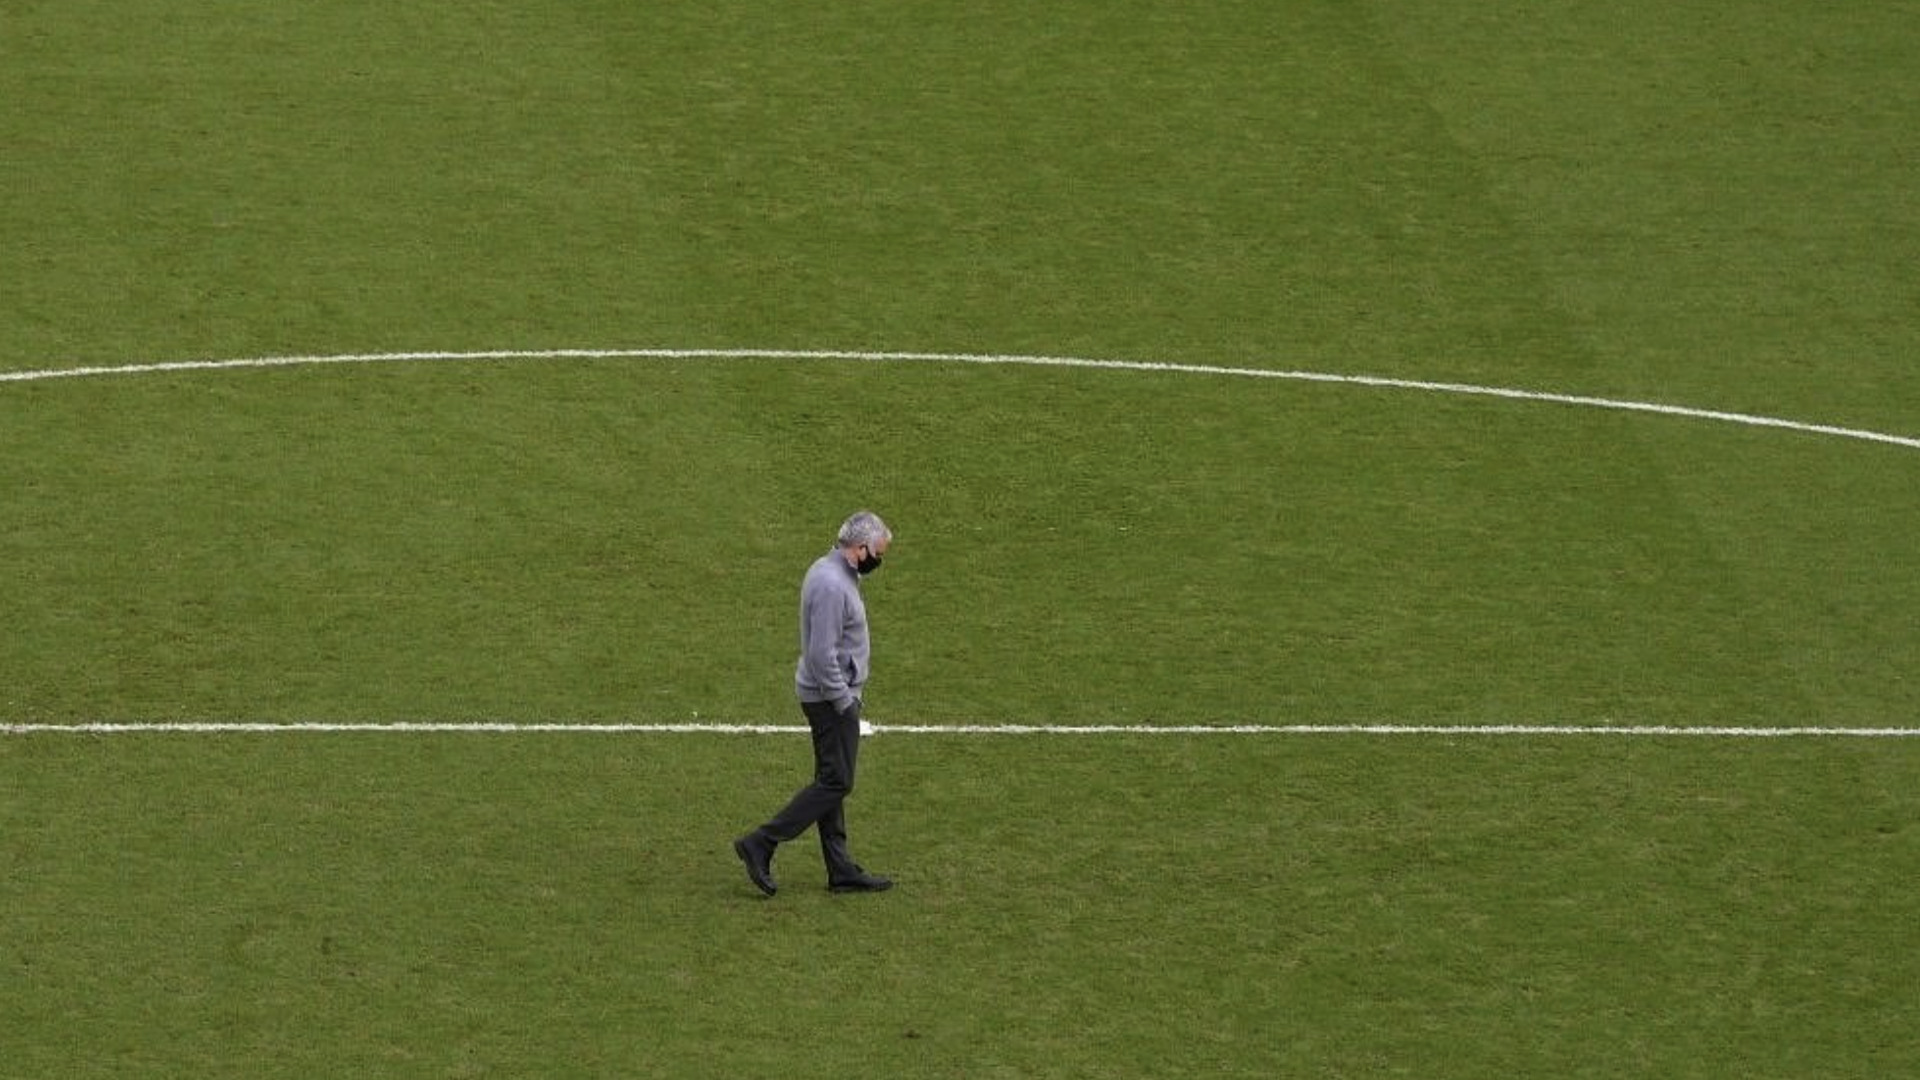 Jose Mourinho walks alone on an empty football pitch